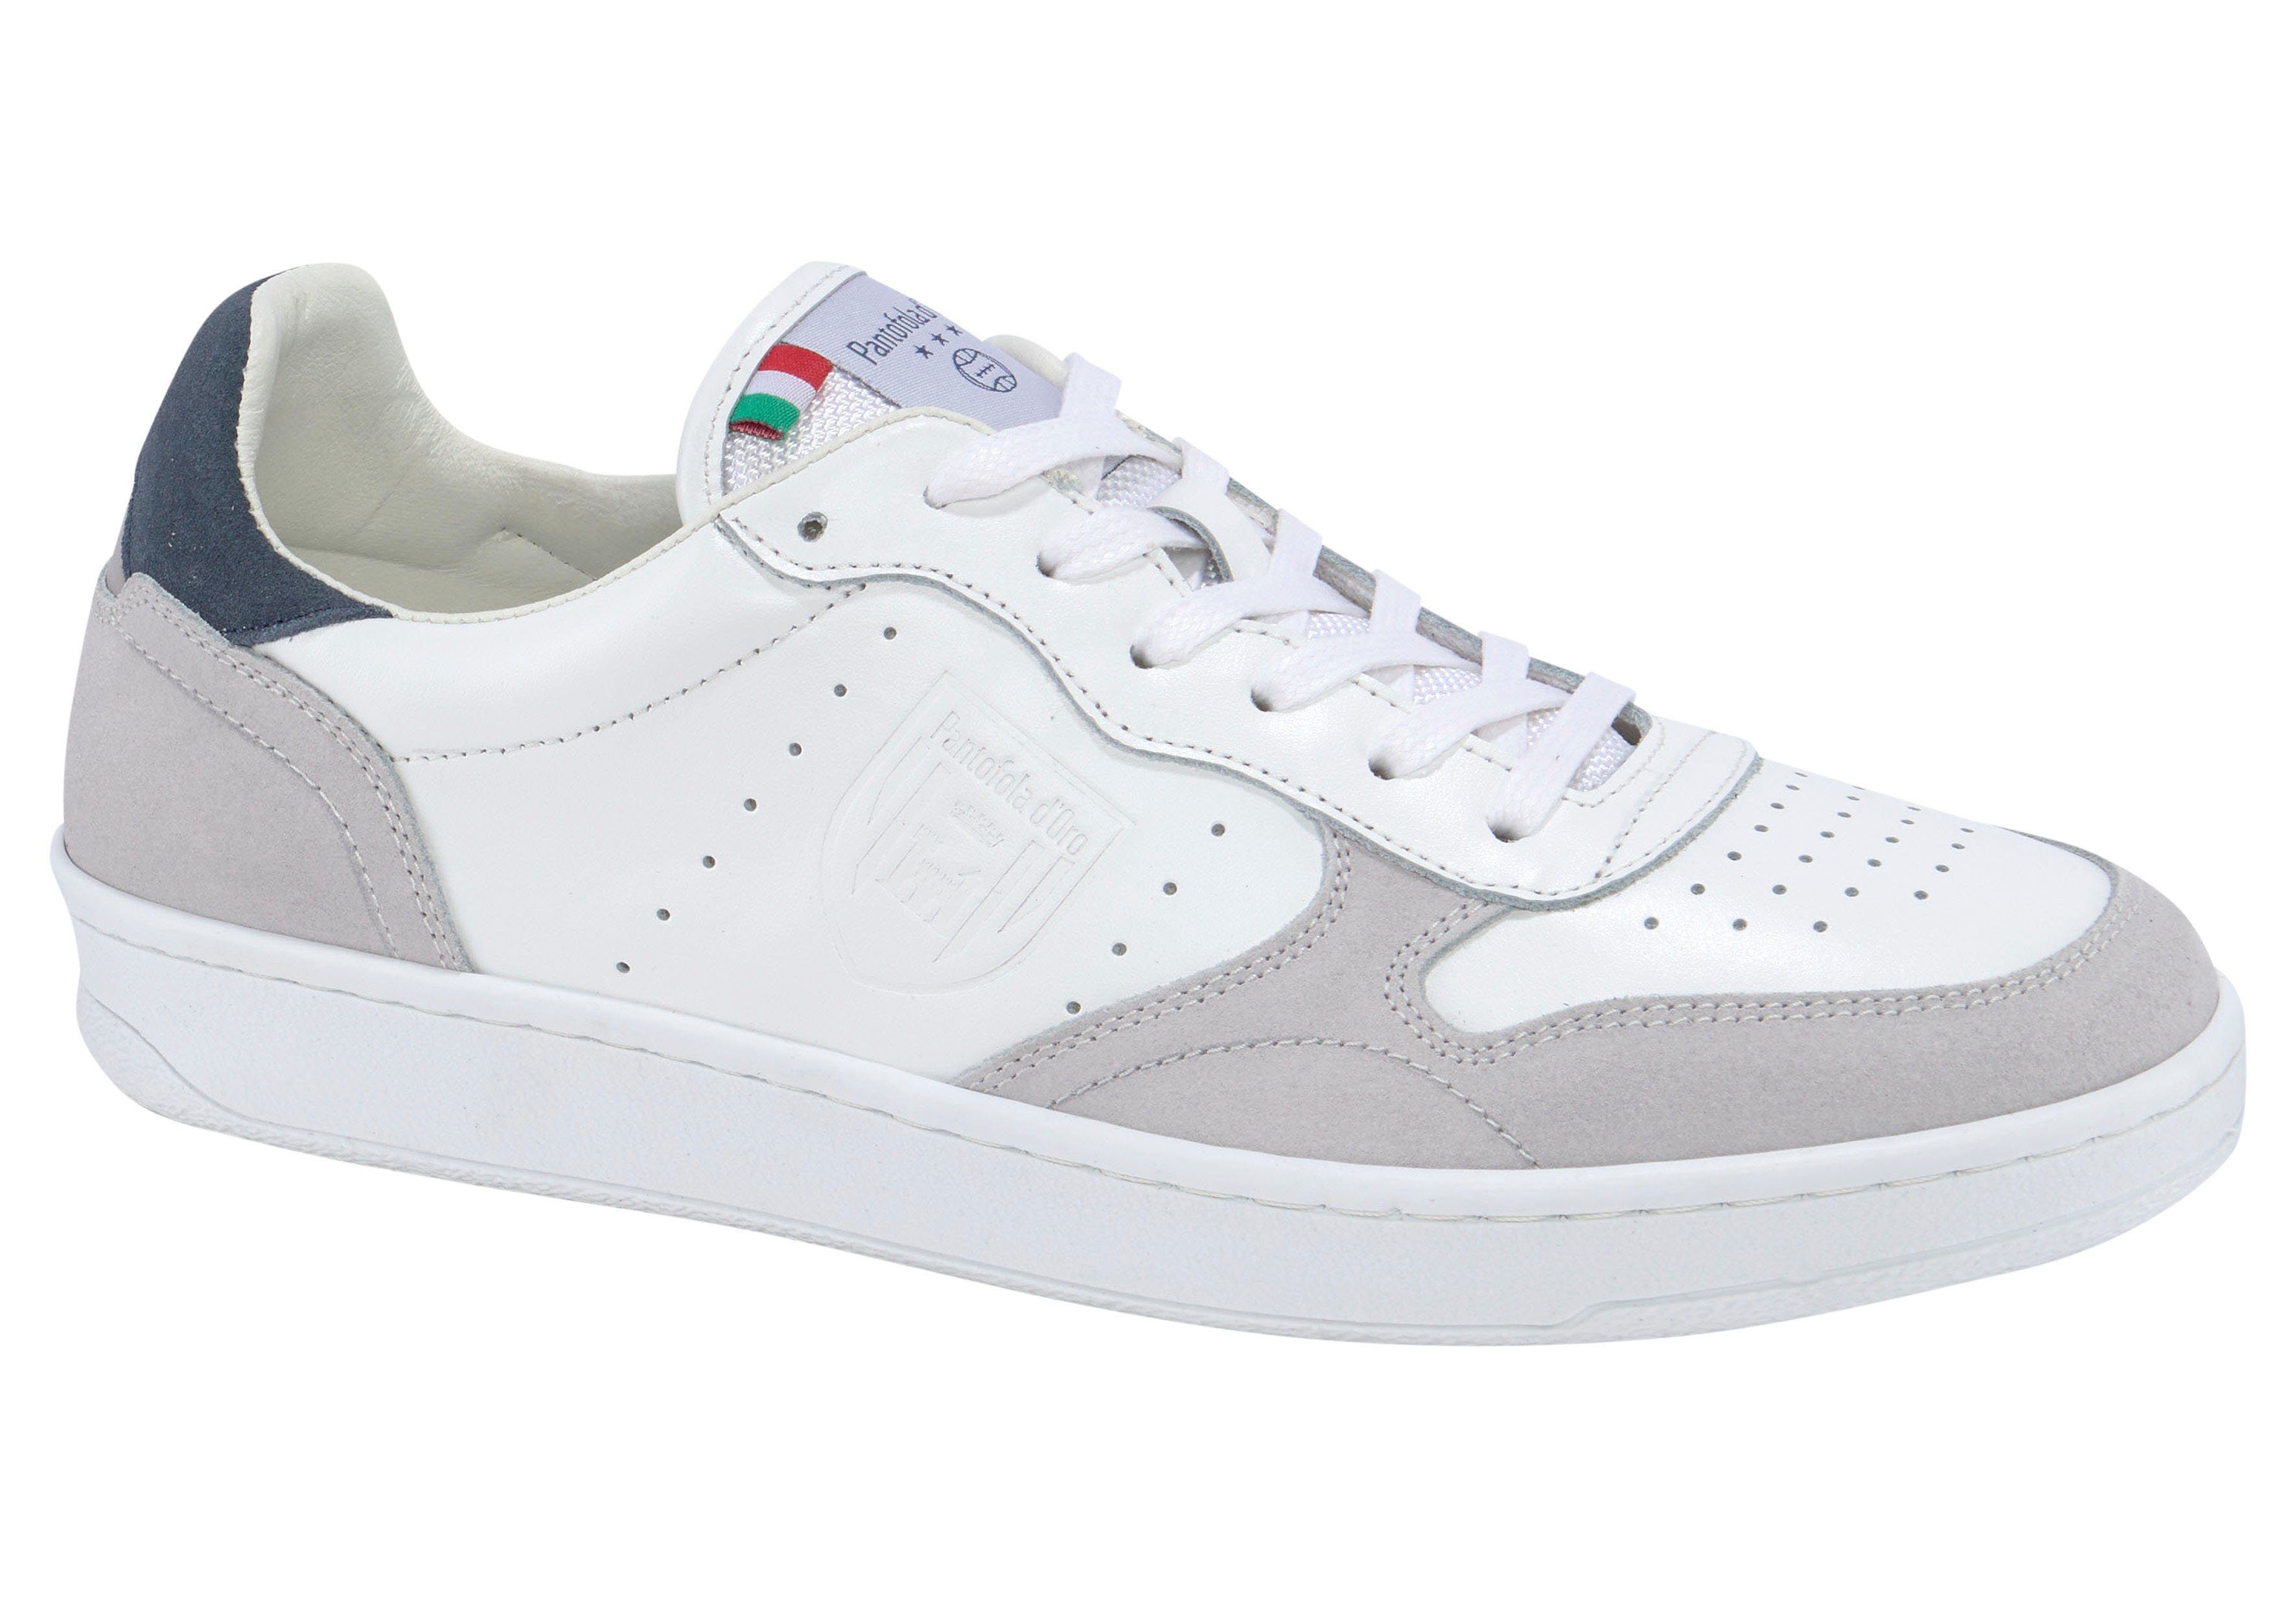 Look UOMO Casual white d´Oro Business Sneaker Pantofola LOW im LIONI